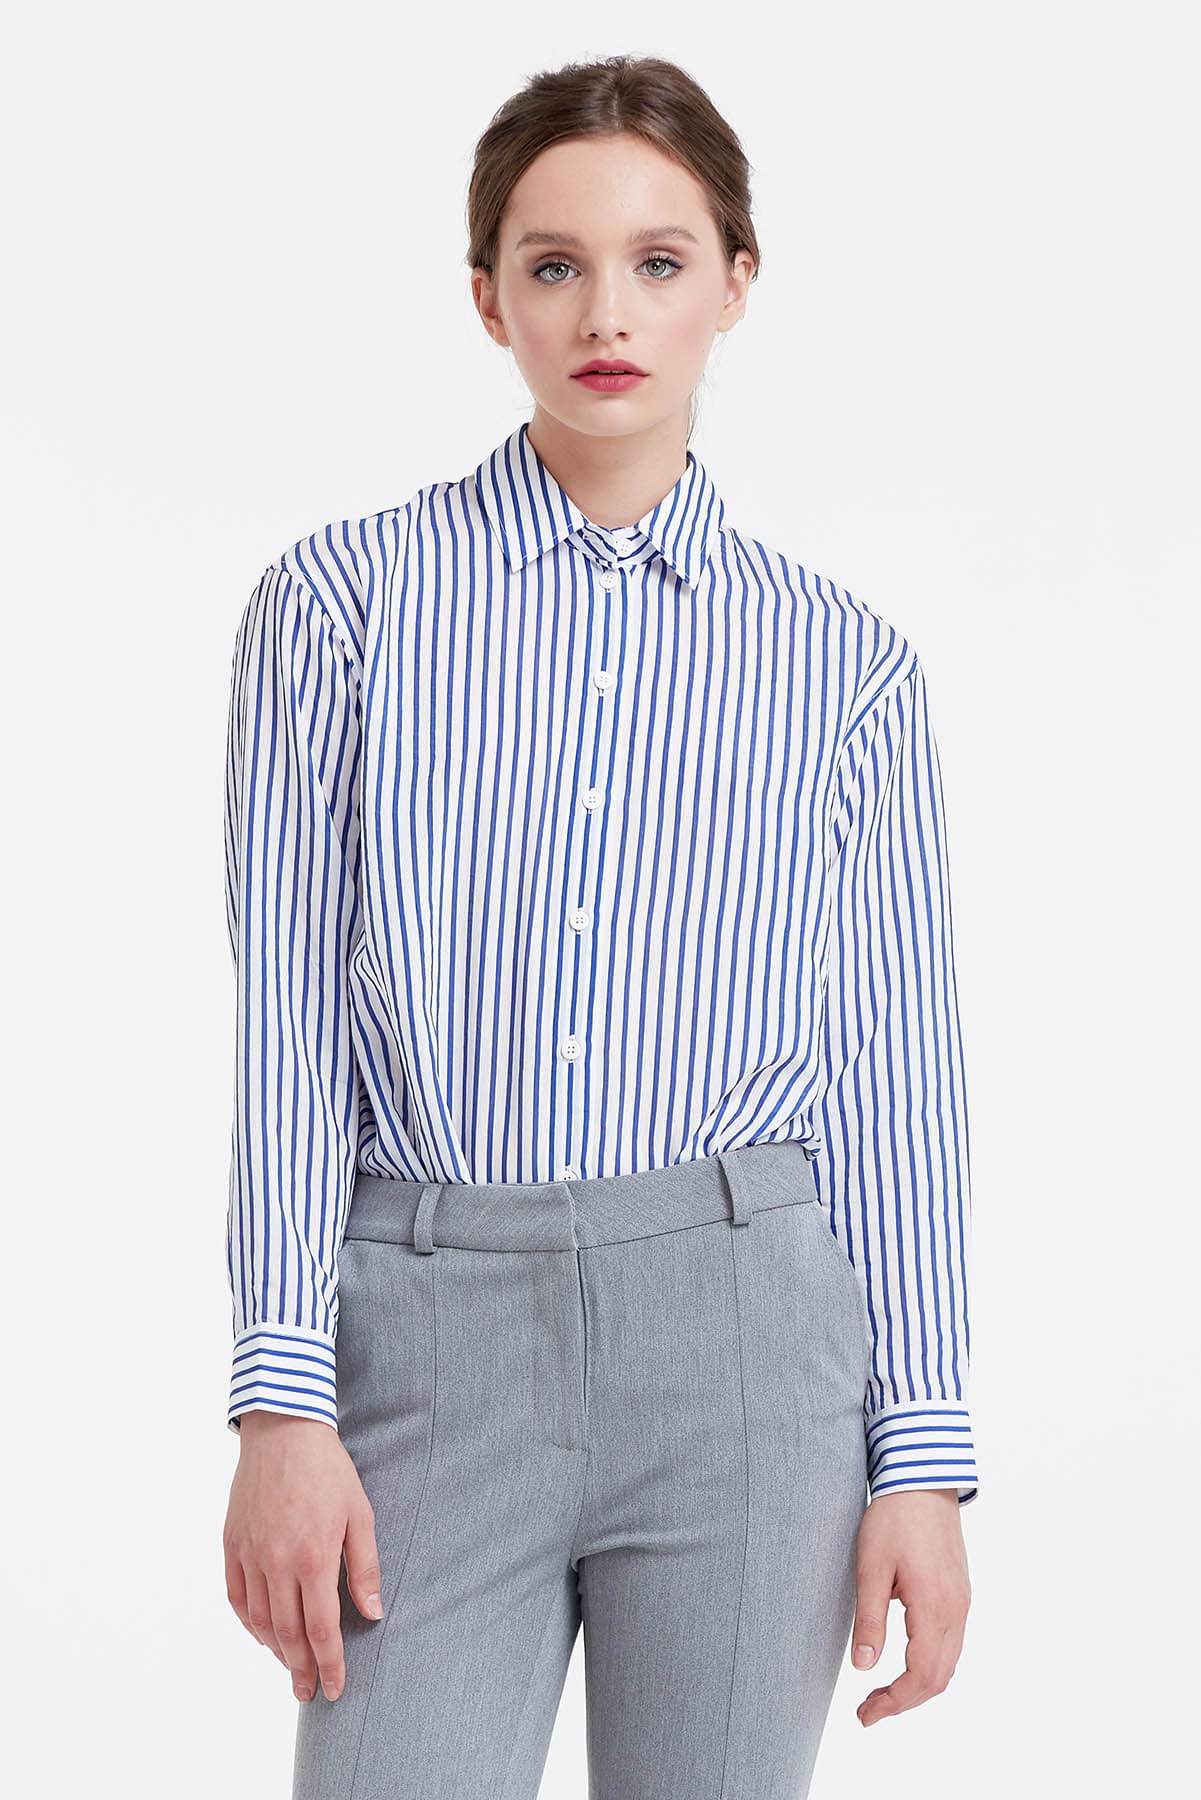 White shirt with blue stripes , photo 1